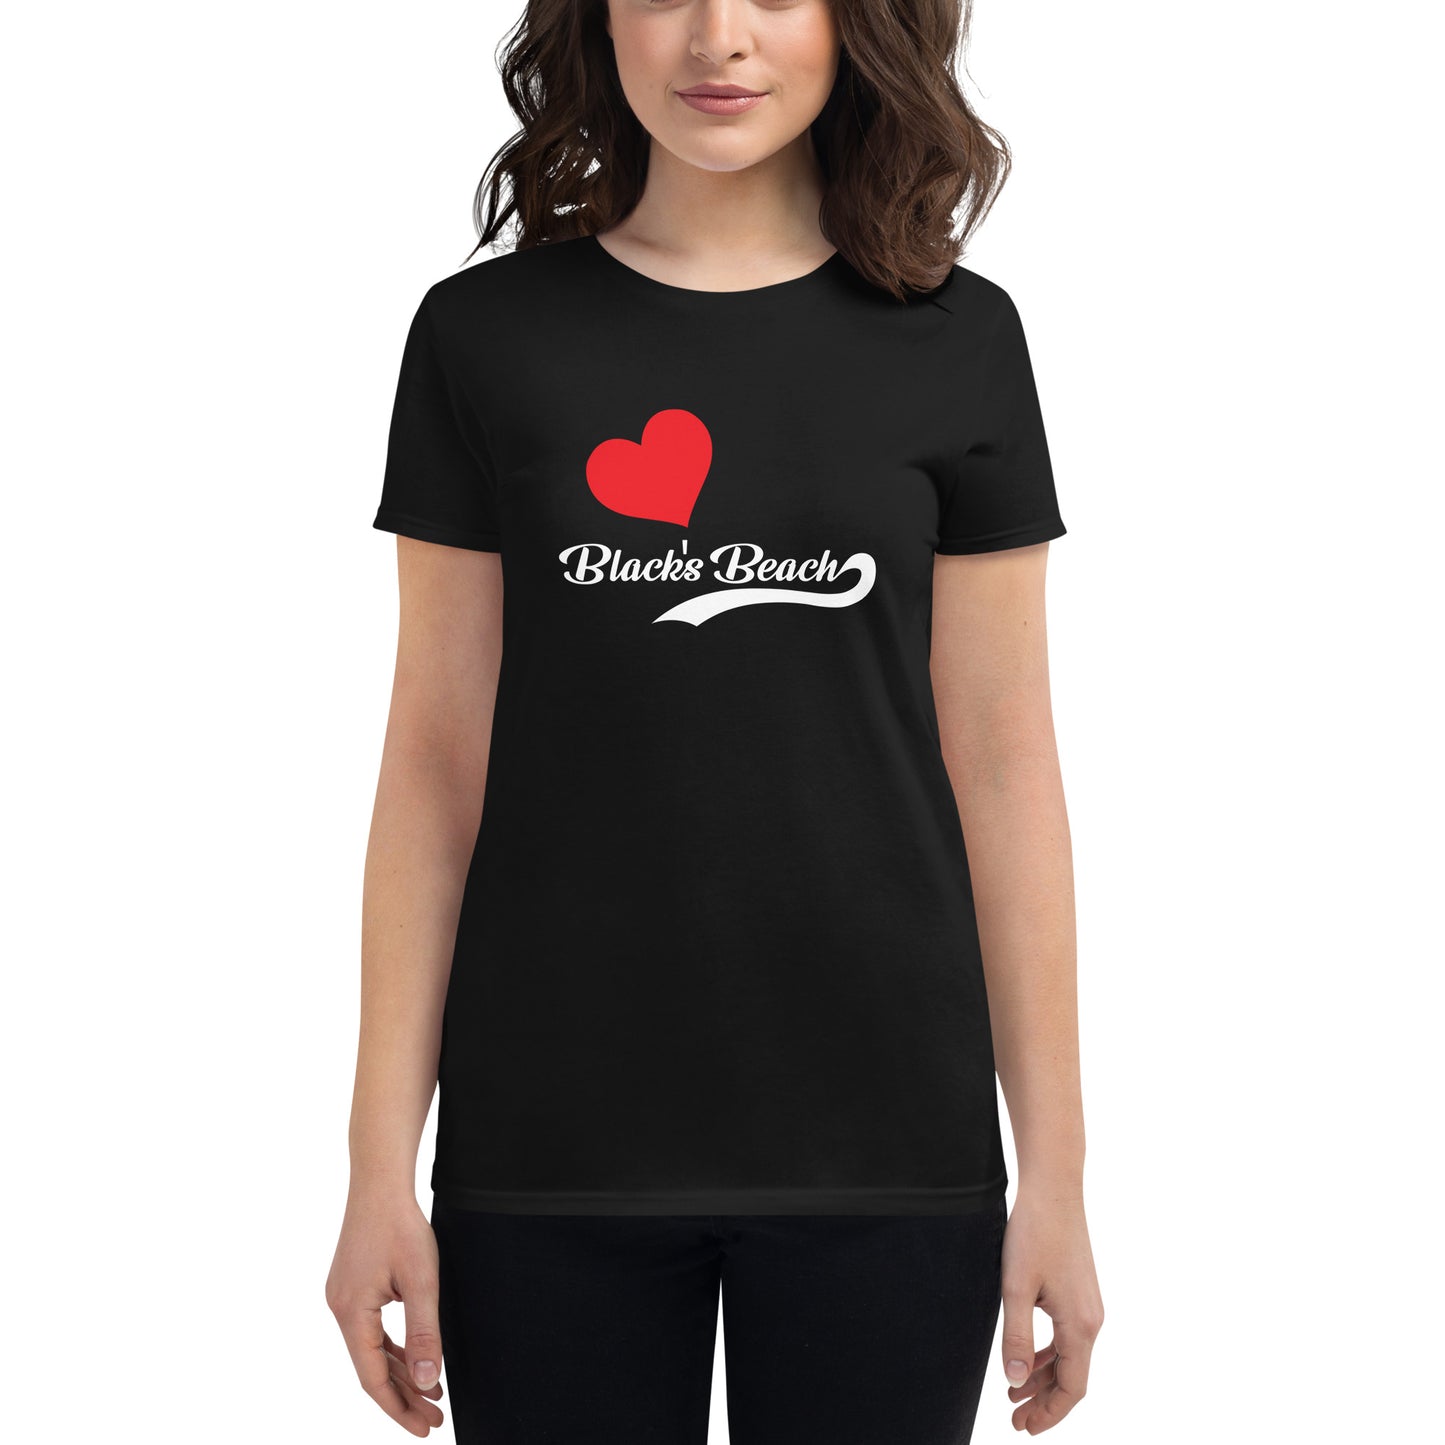 Black's Beach Tees / Style 15 / Women's short sleeve t-shirt